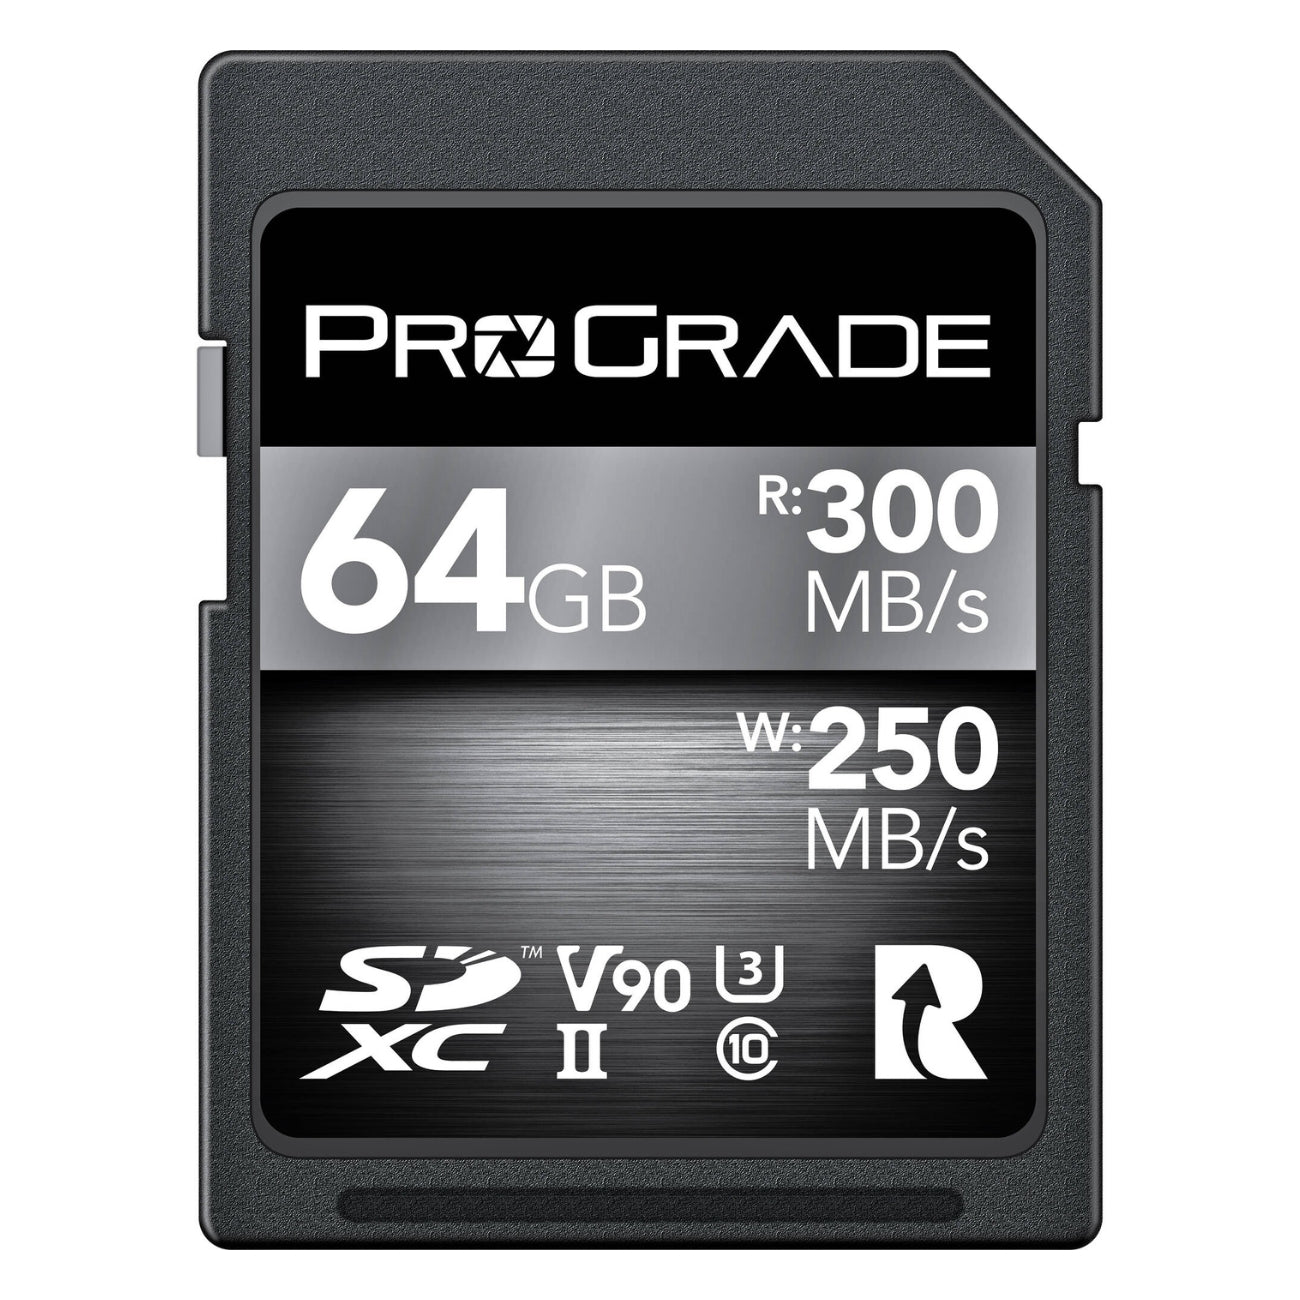 ProGrade Digital SDXC UHS-II V90 300R Memory Card (64GB) - 64gb v90 sd card